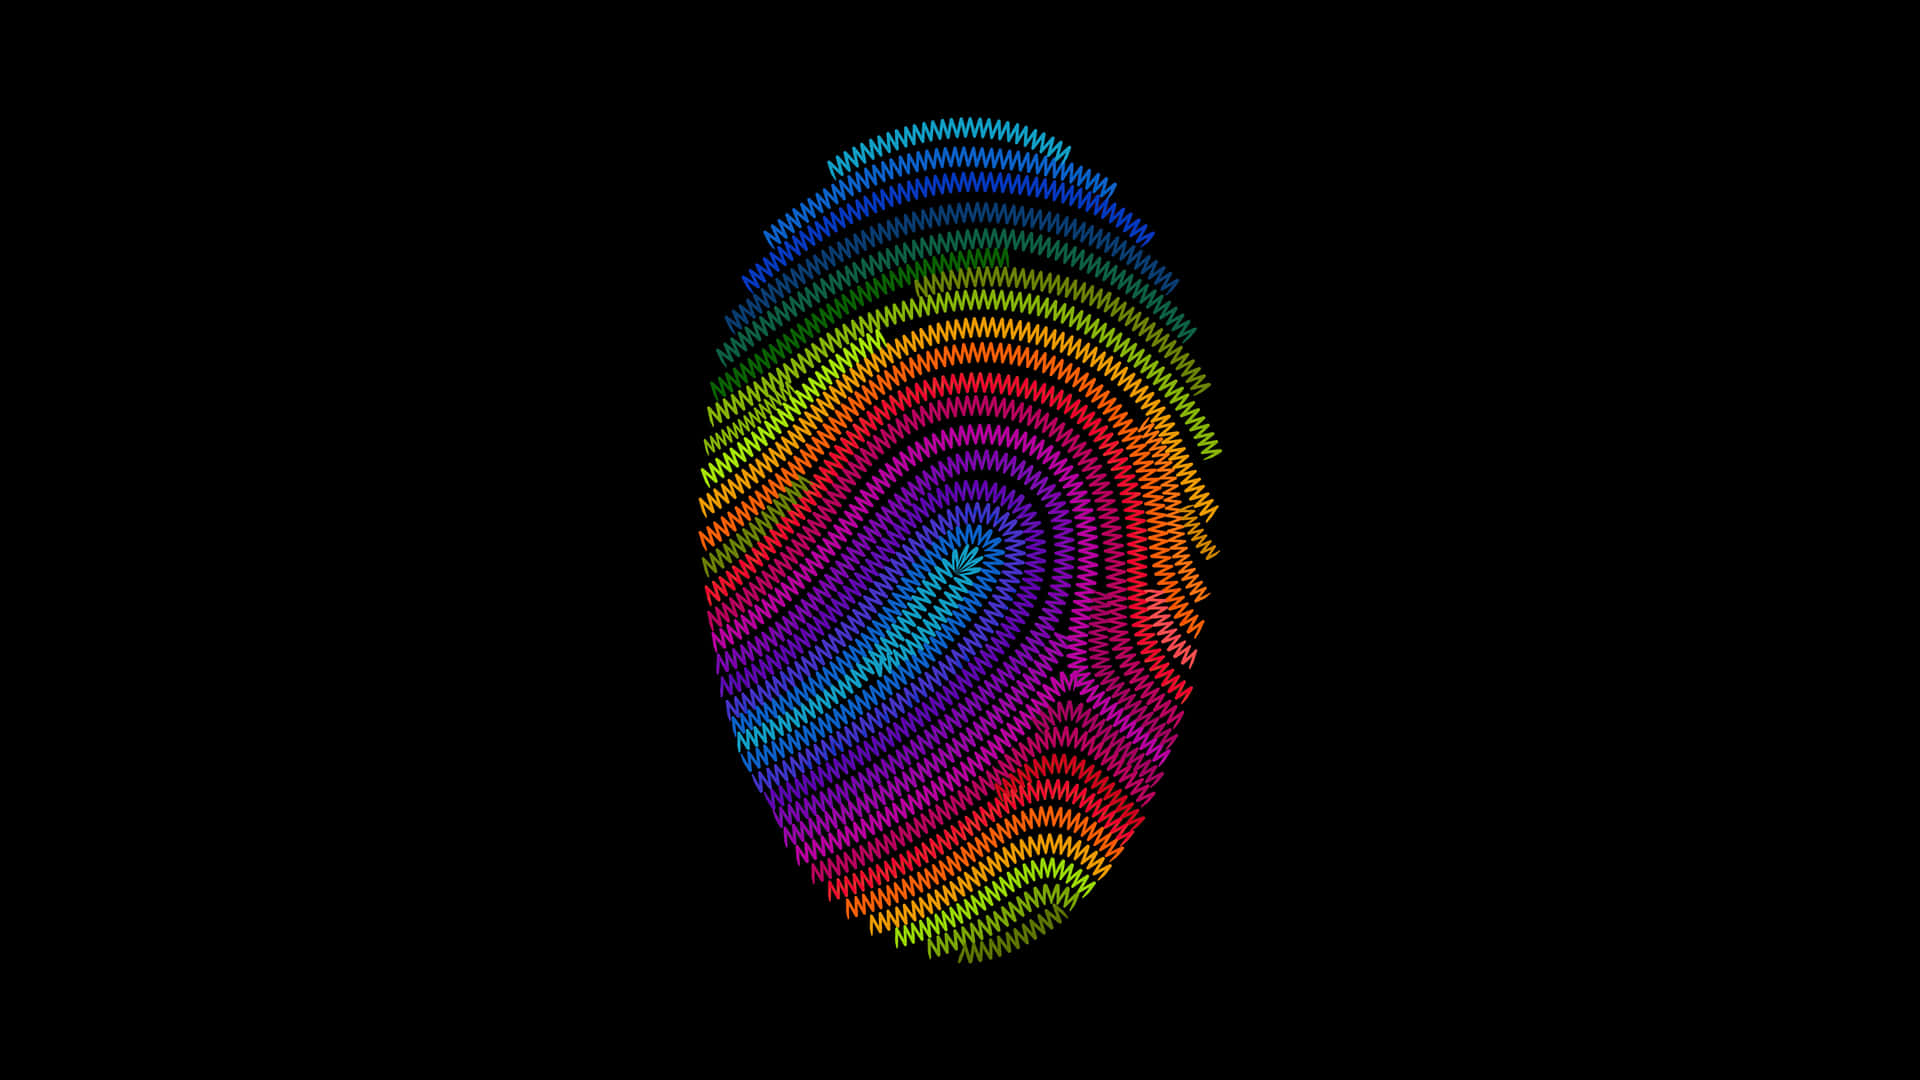 A Rainbow Fingerprint On A Black Background